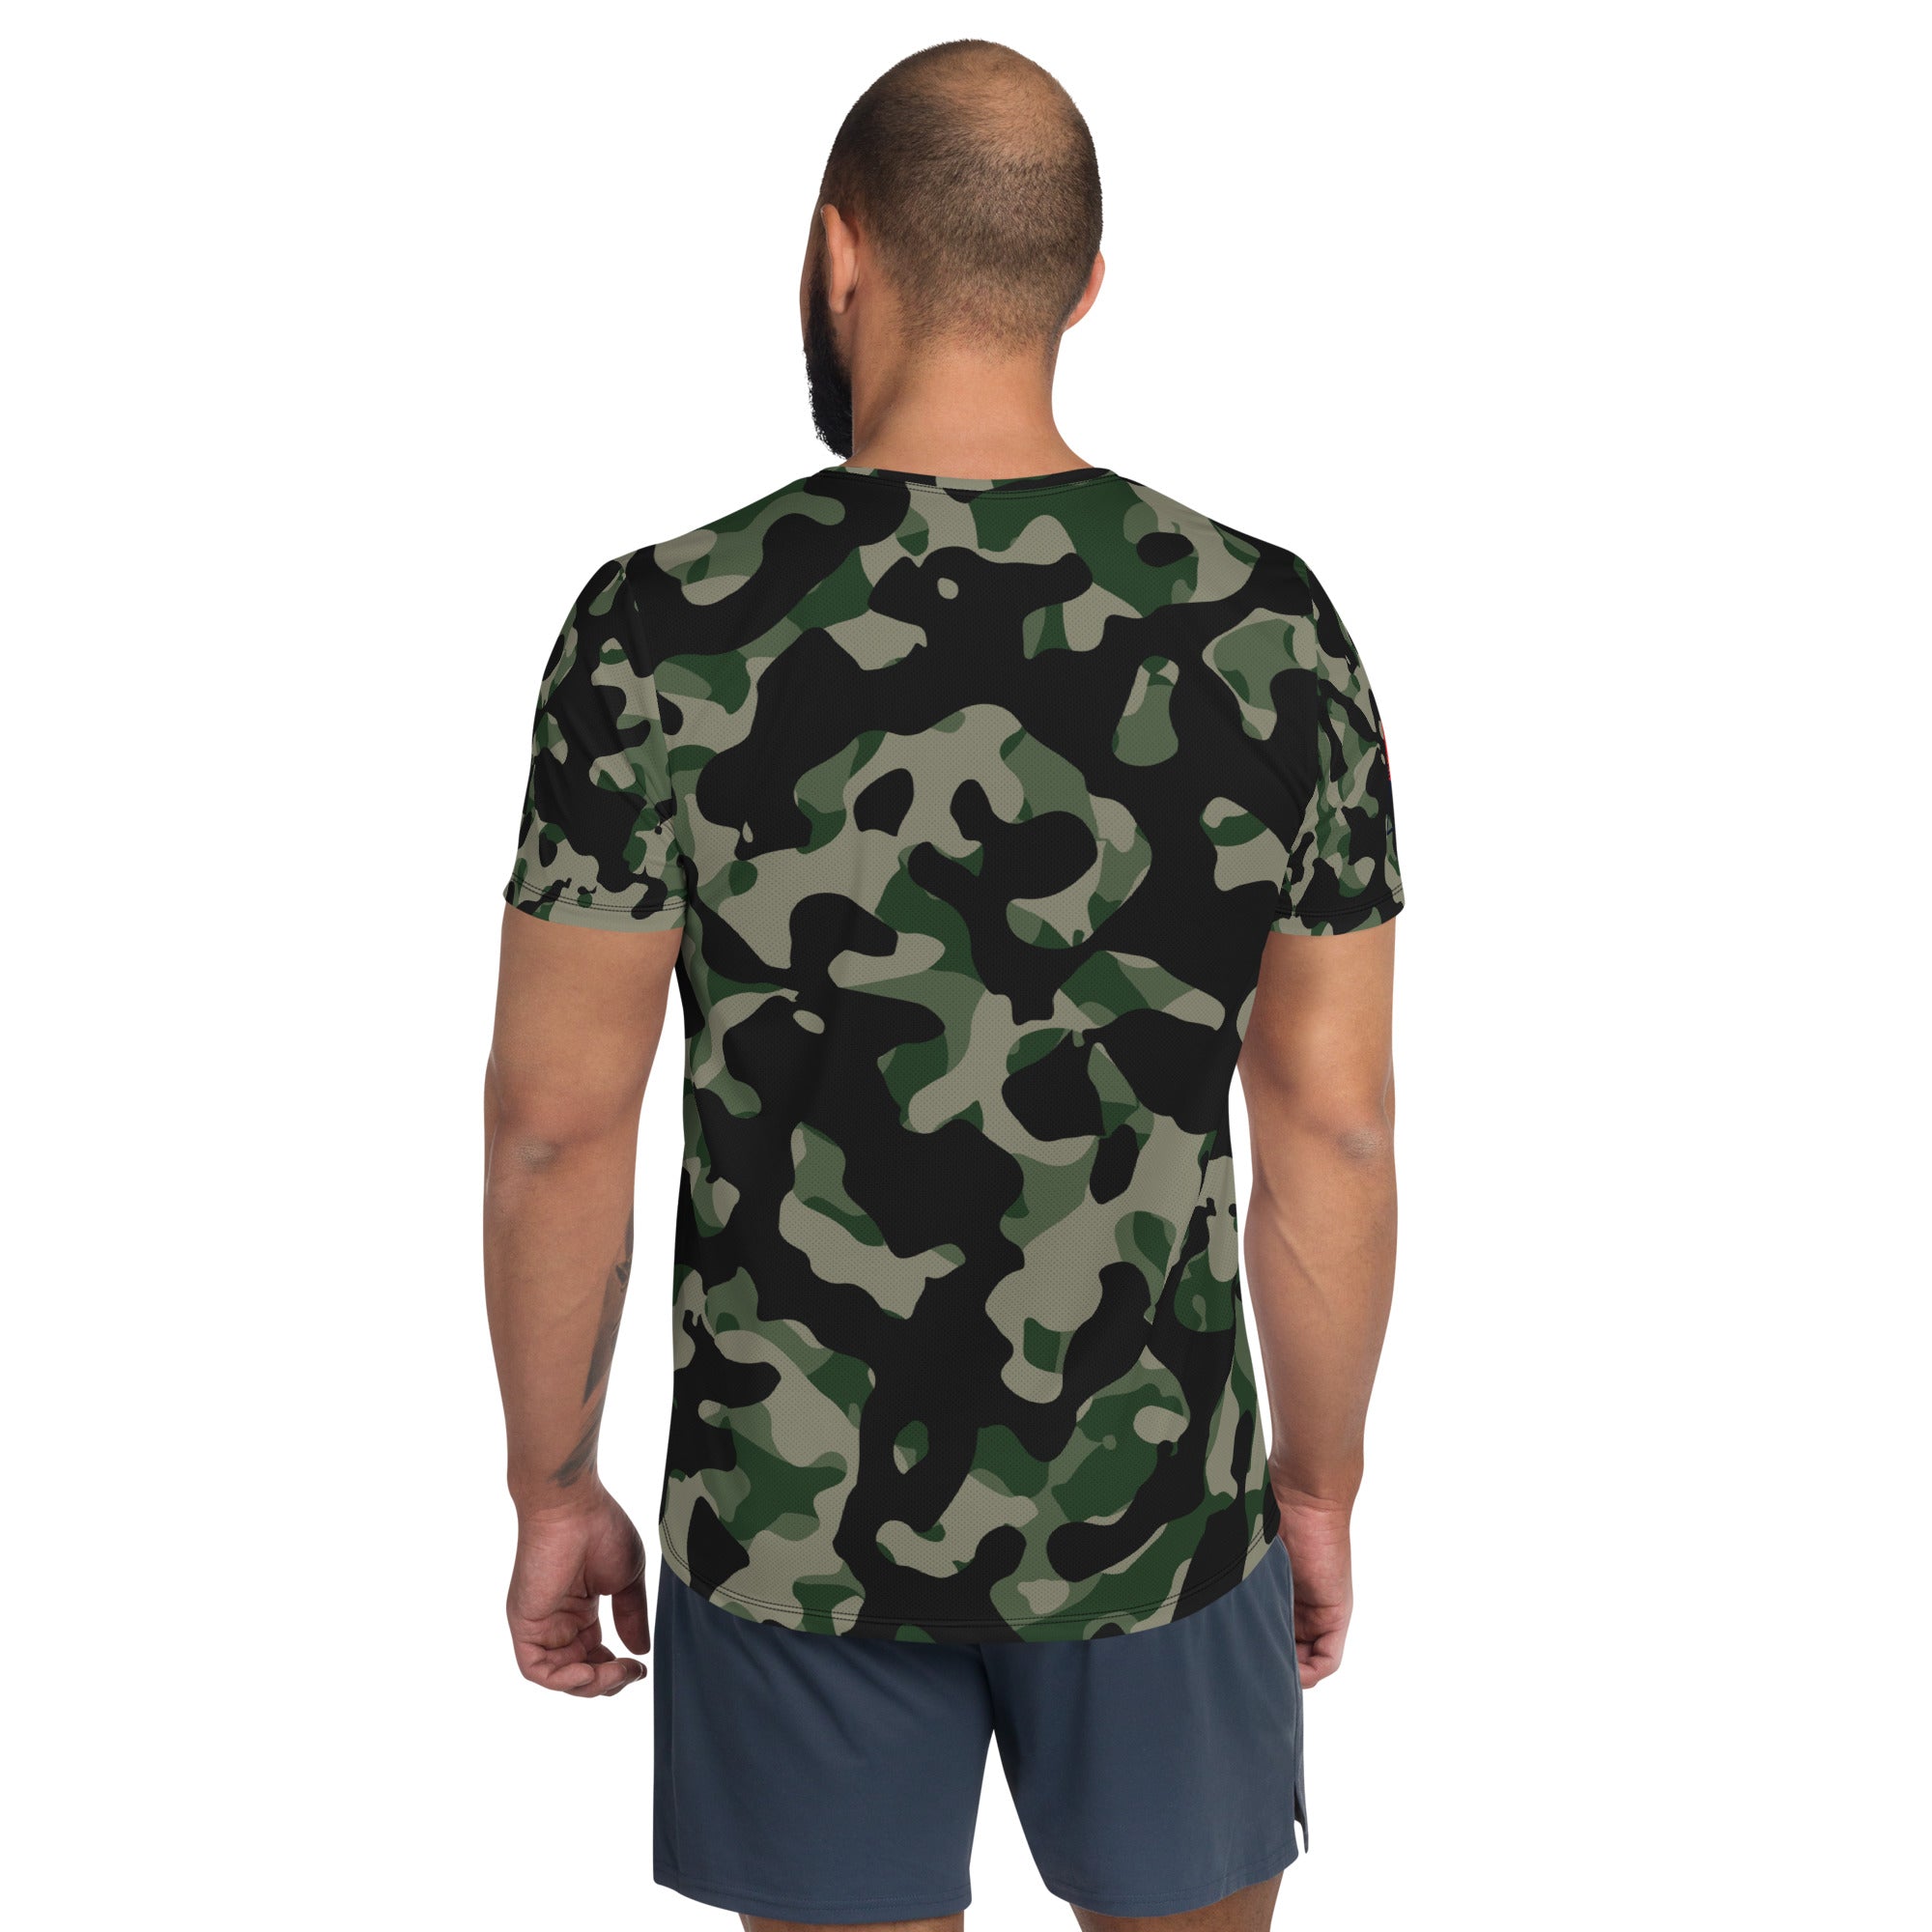 All-Over Print Men's Camo T-shirt